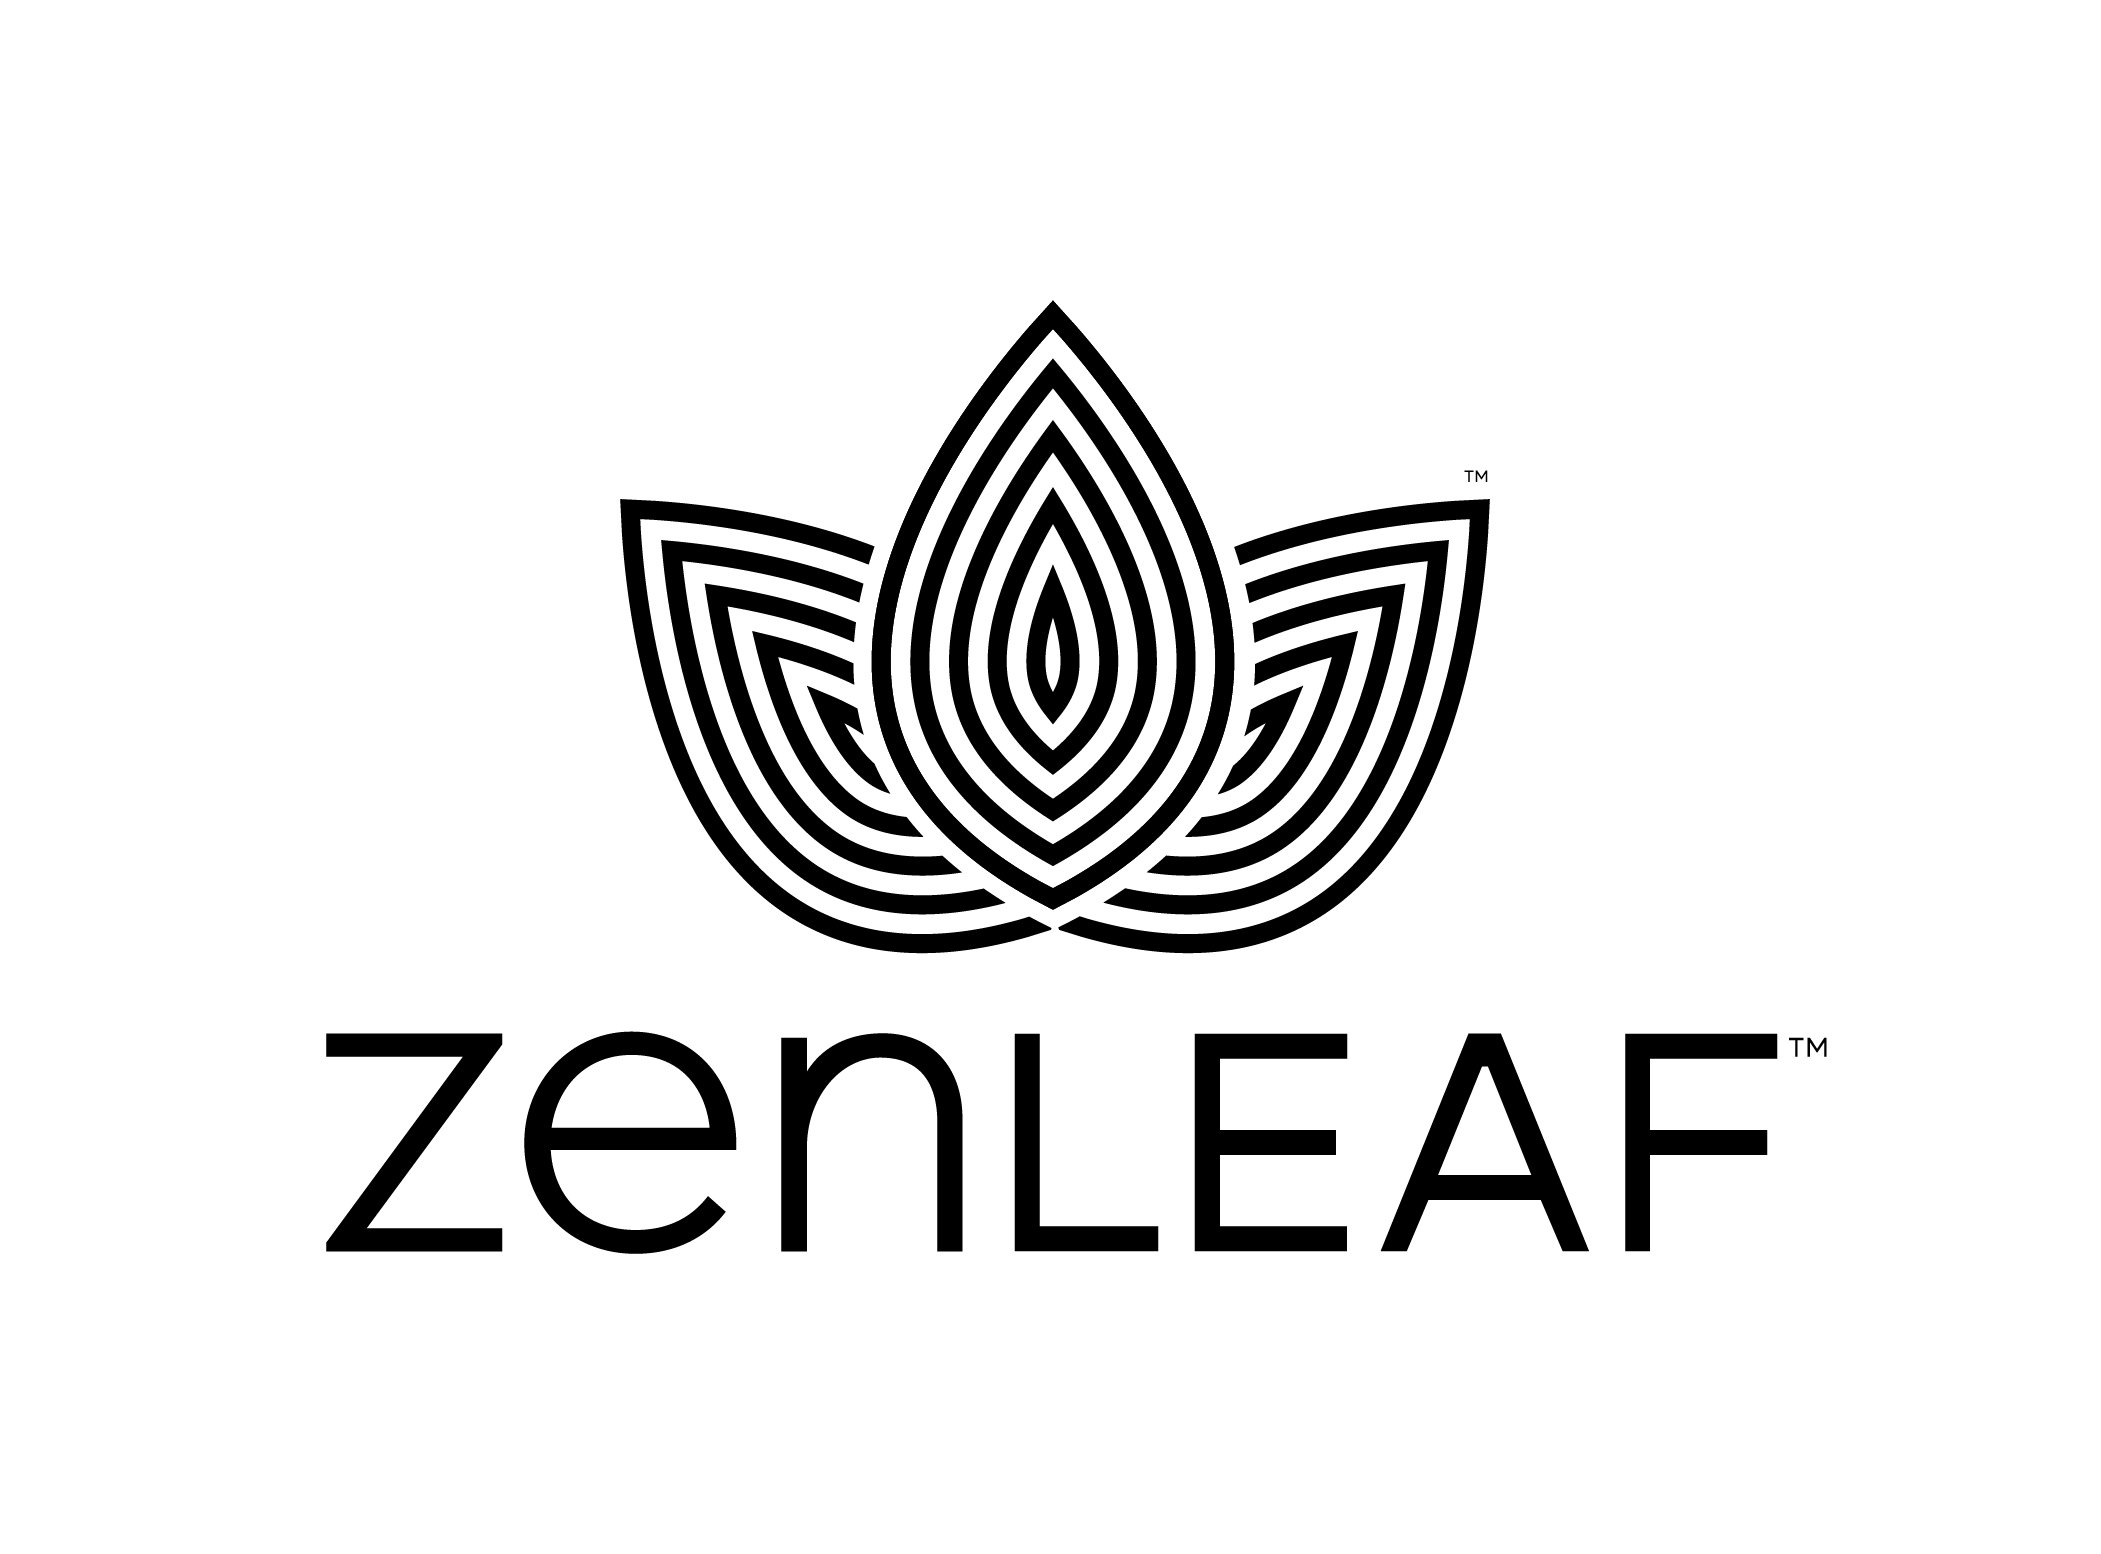 Zen Leaf - West Chester